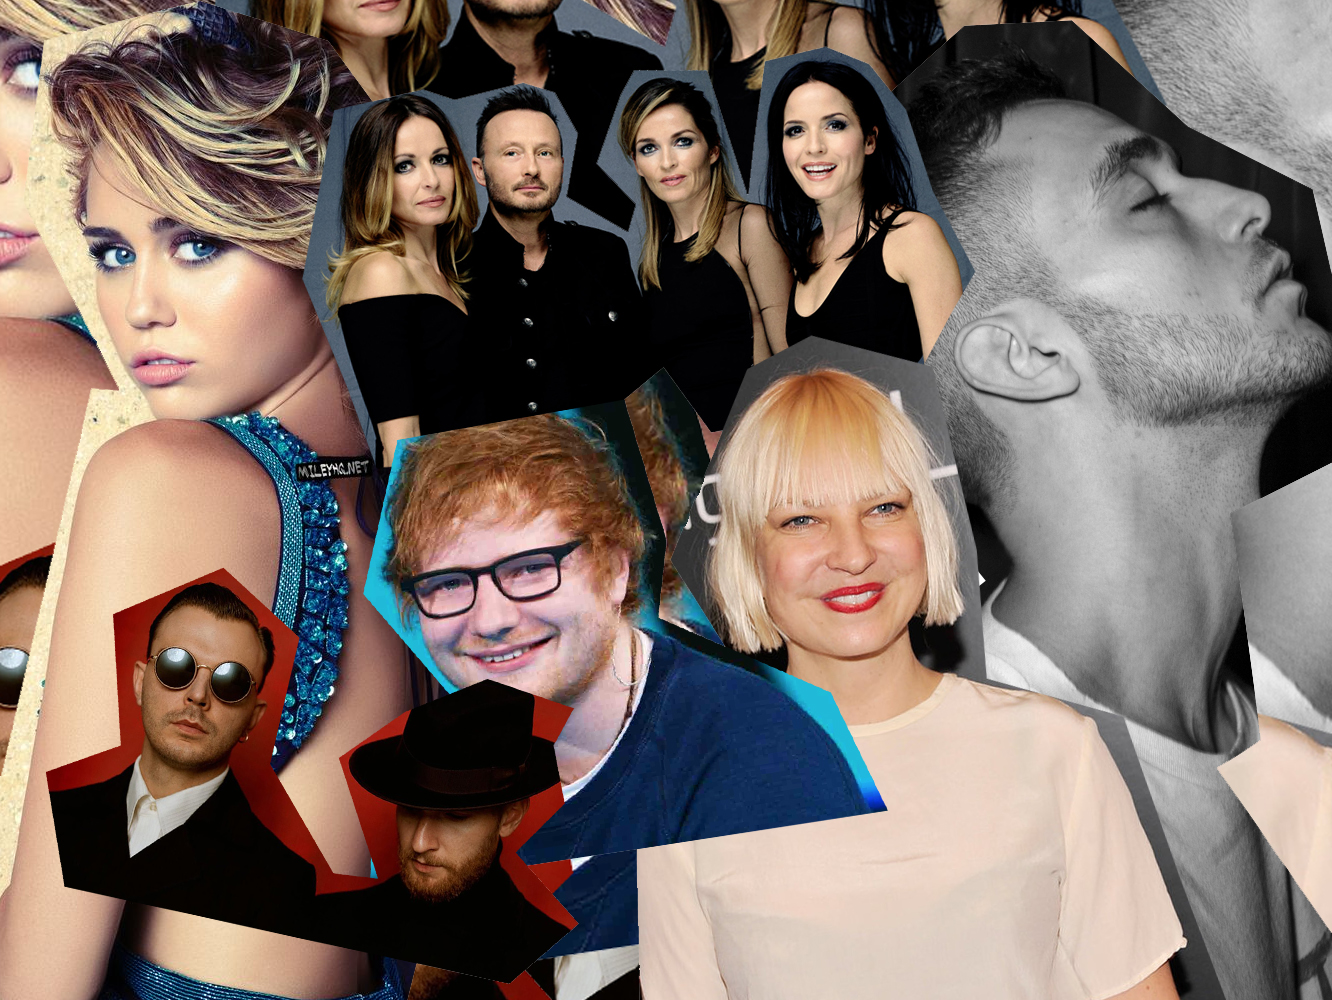  MUSIC FRIDAYS | Lo nuevo de Demi Lovato, The Corrs, Ed Sheeran o Las Cyrus